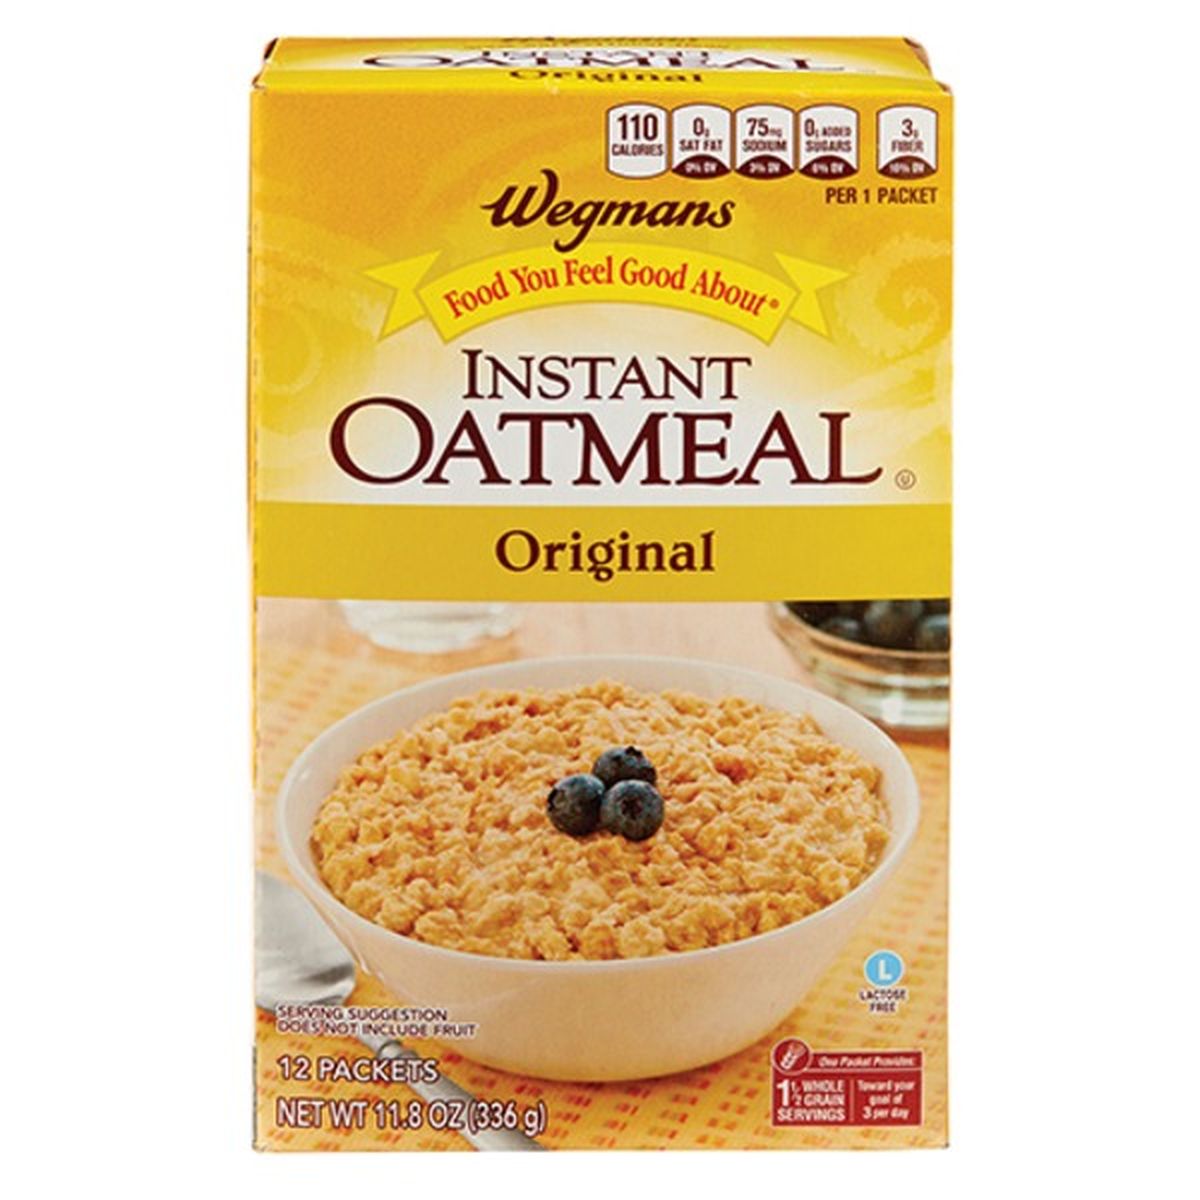 Calories in Wegmans Instant Oatmeal, Original